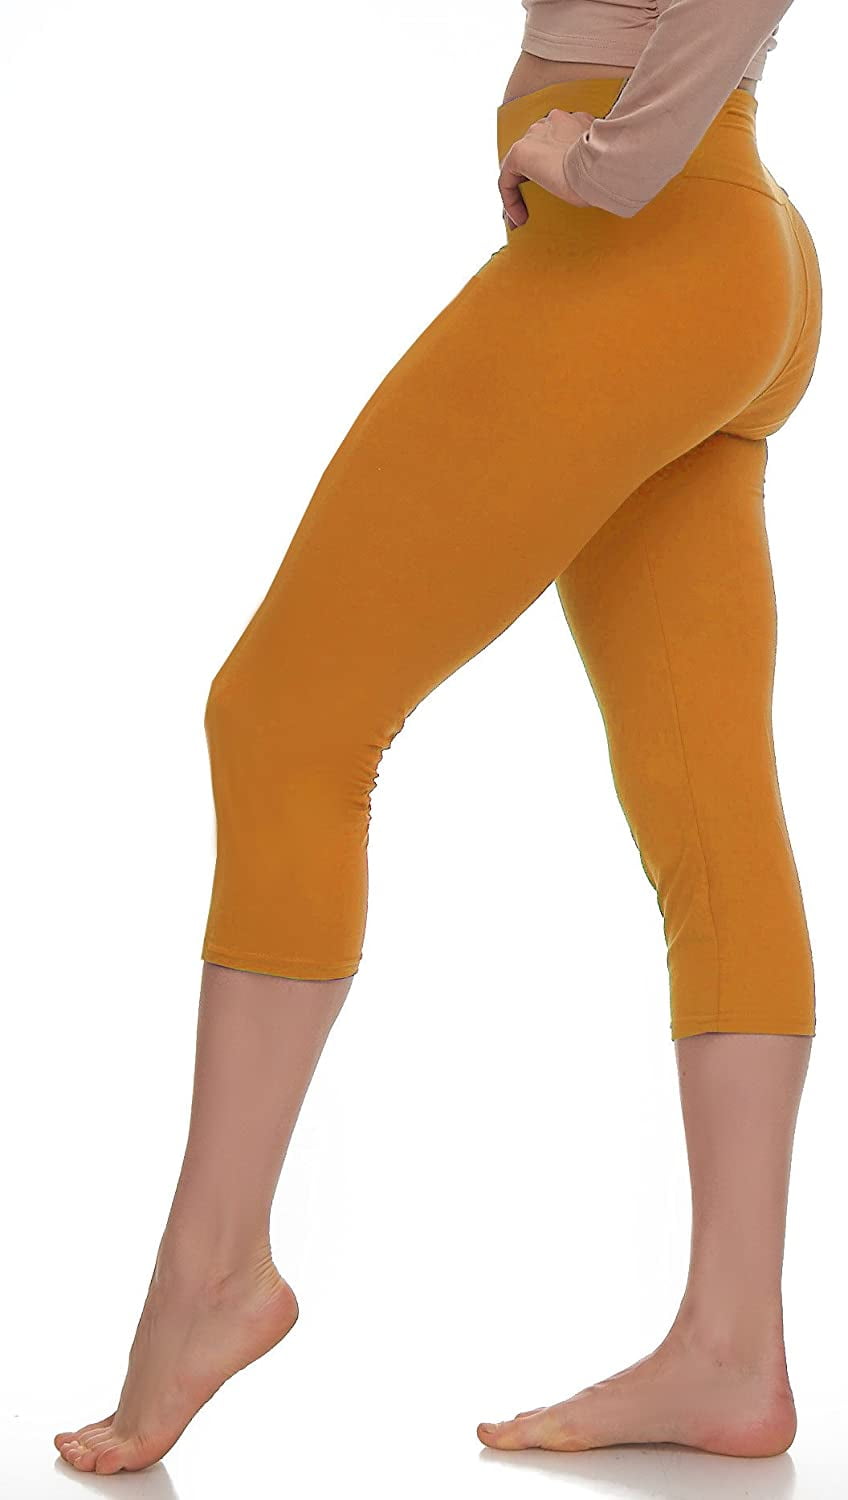 LMB Capri Leggings for Women Buttery Soft Polyester Fabric, Mustard, XS - L